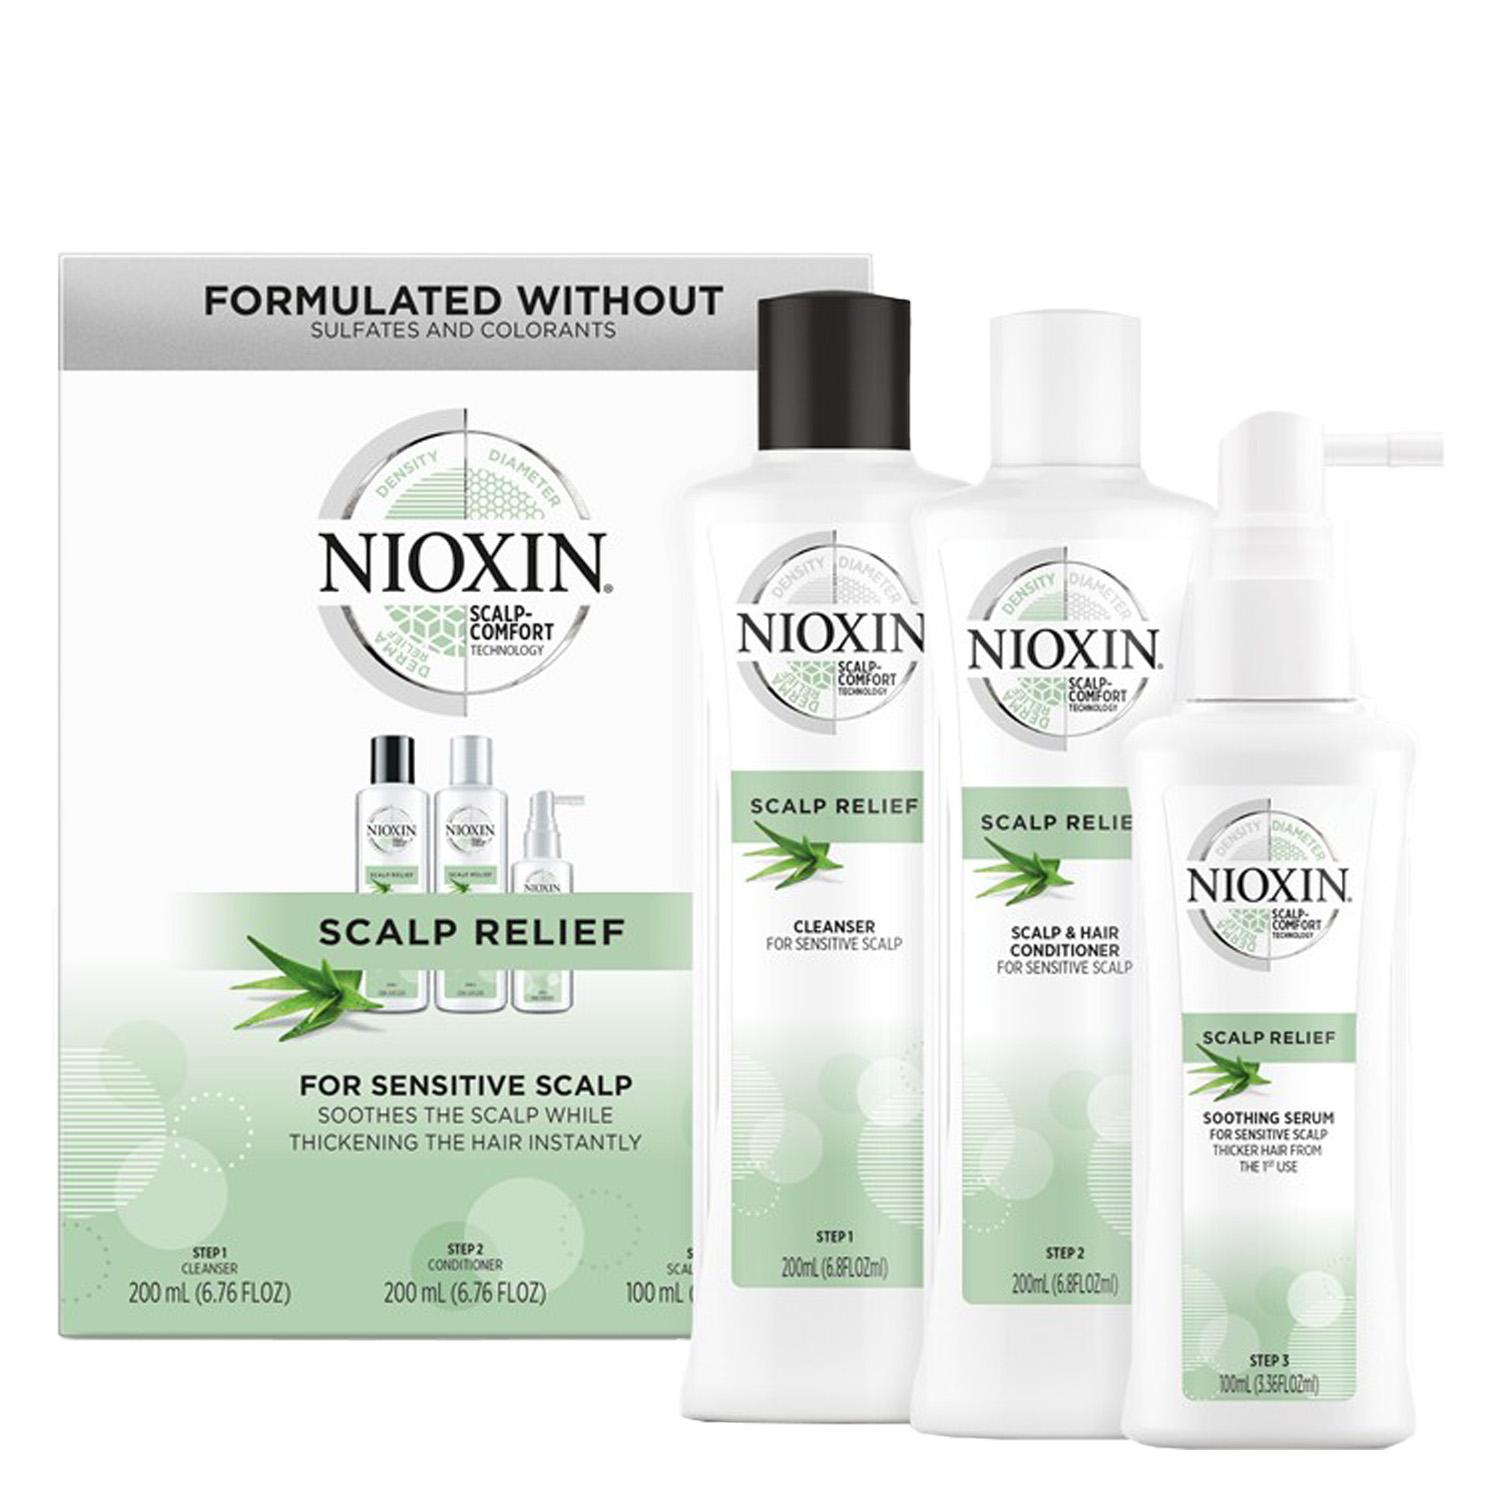 Nioxin - 3 Step System